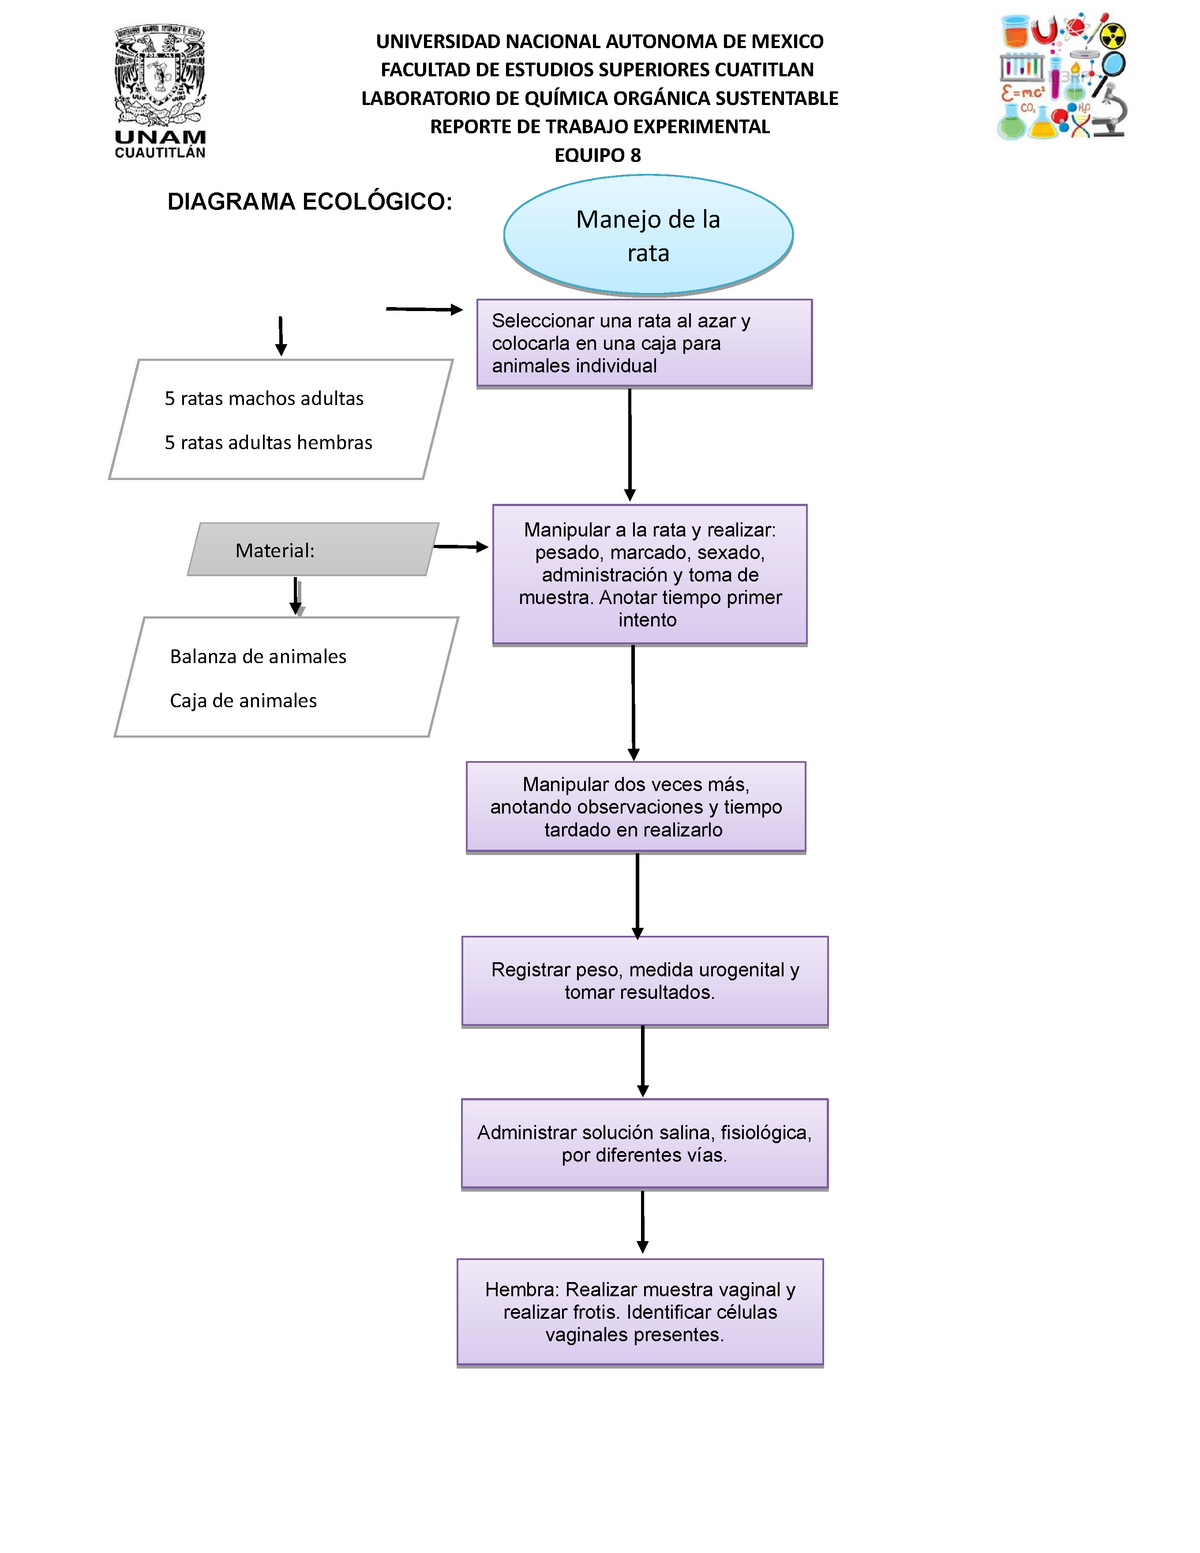 Diagrama De Flujo Manejo De La Rata Diagrama EcolÓgico Universidad Nacional Autonoma De 6991